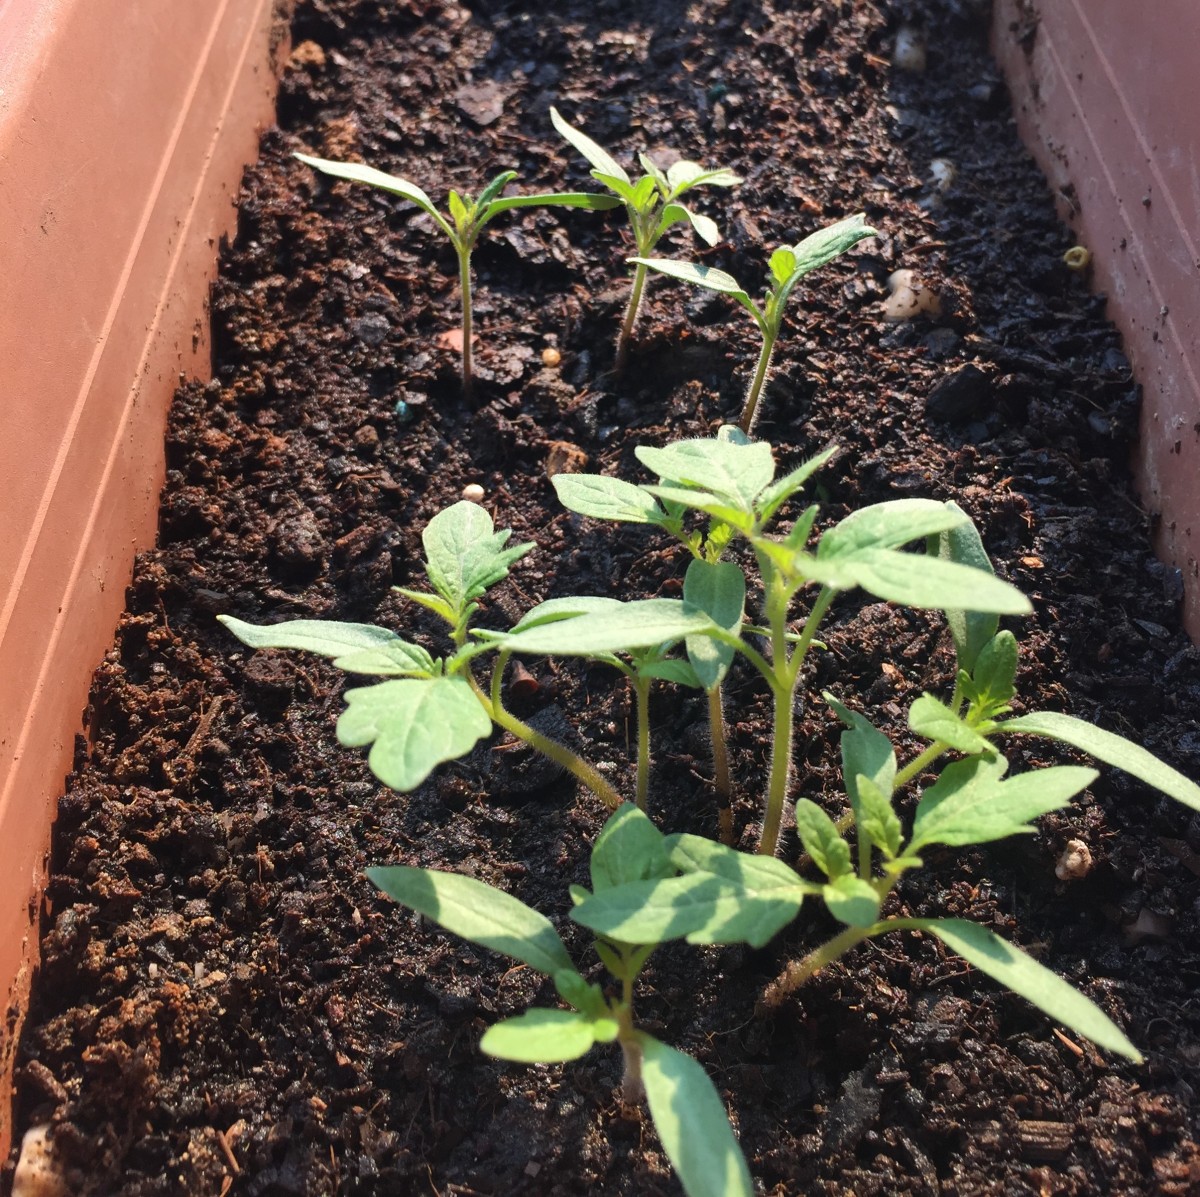 Tomato plant sprouts